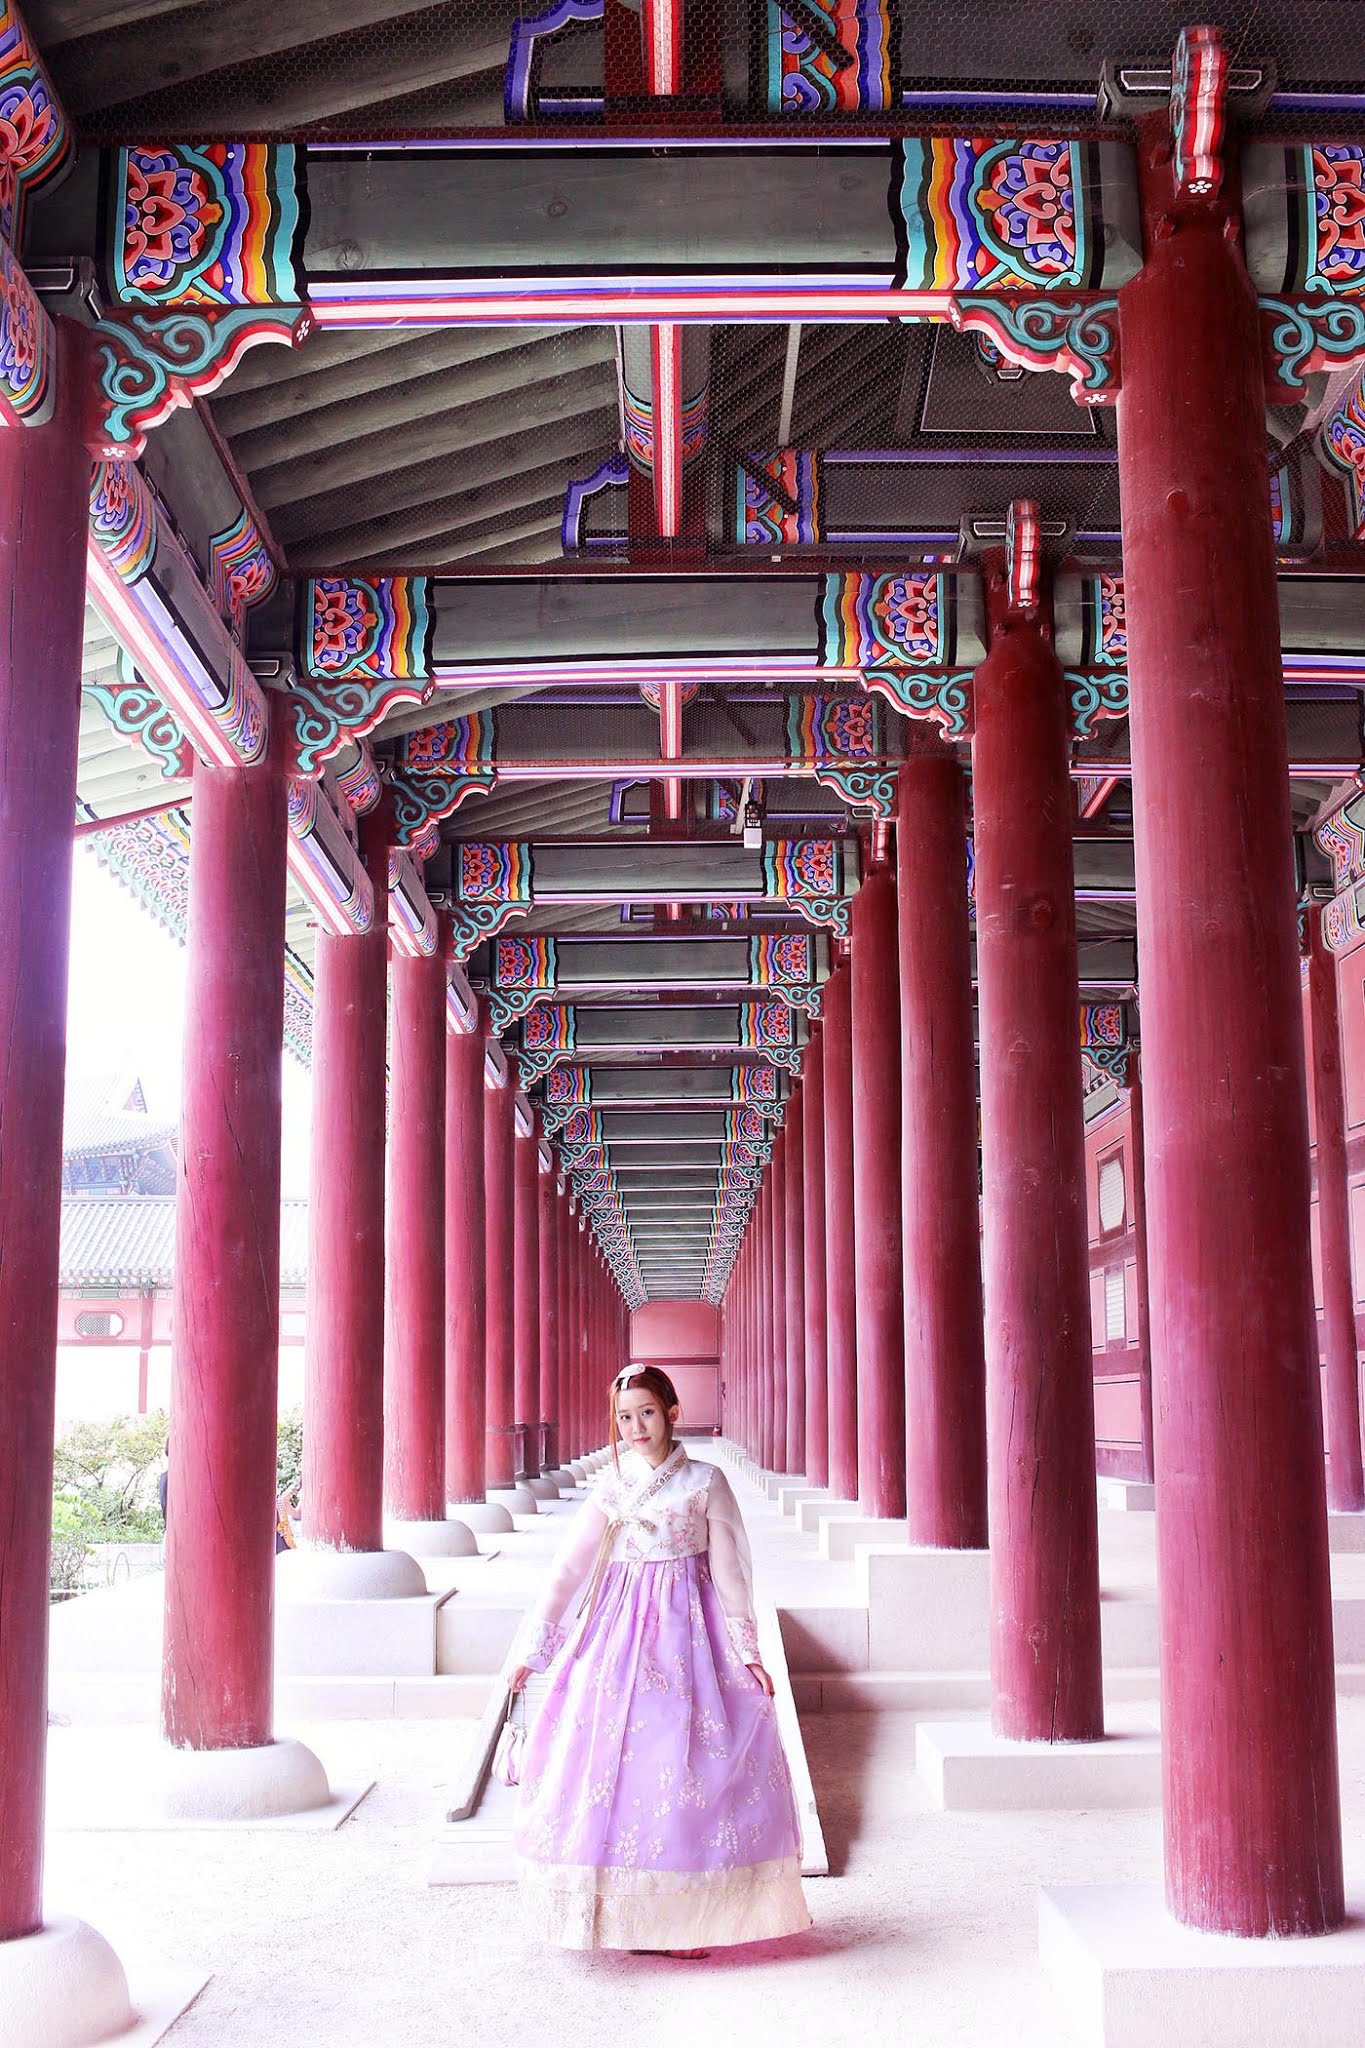 gyeongbokgung palace itinerary